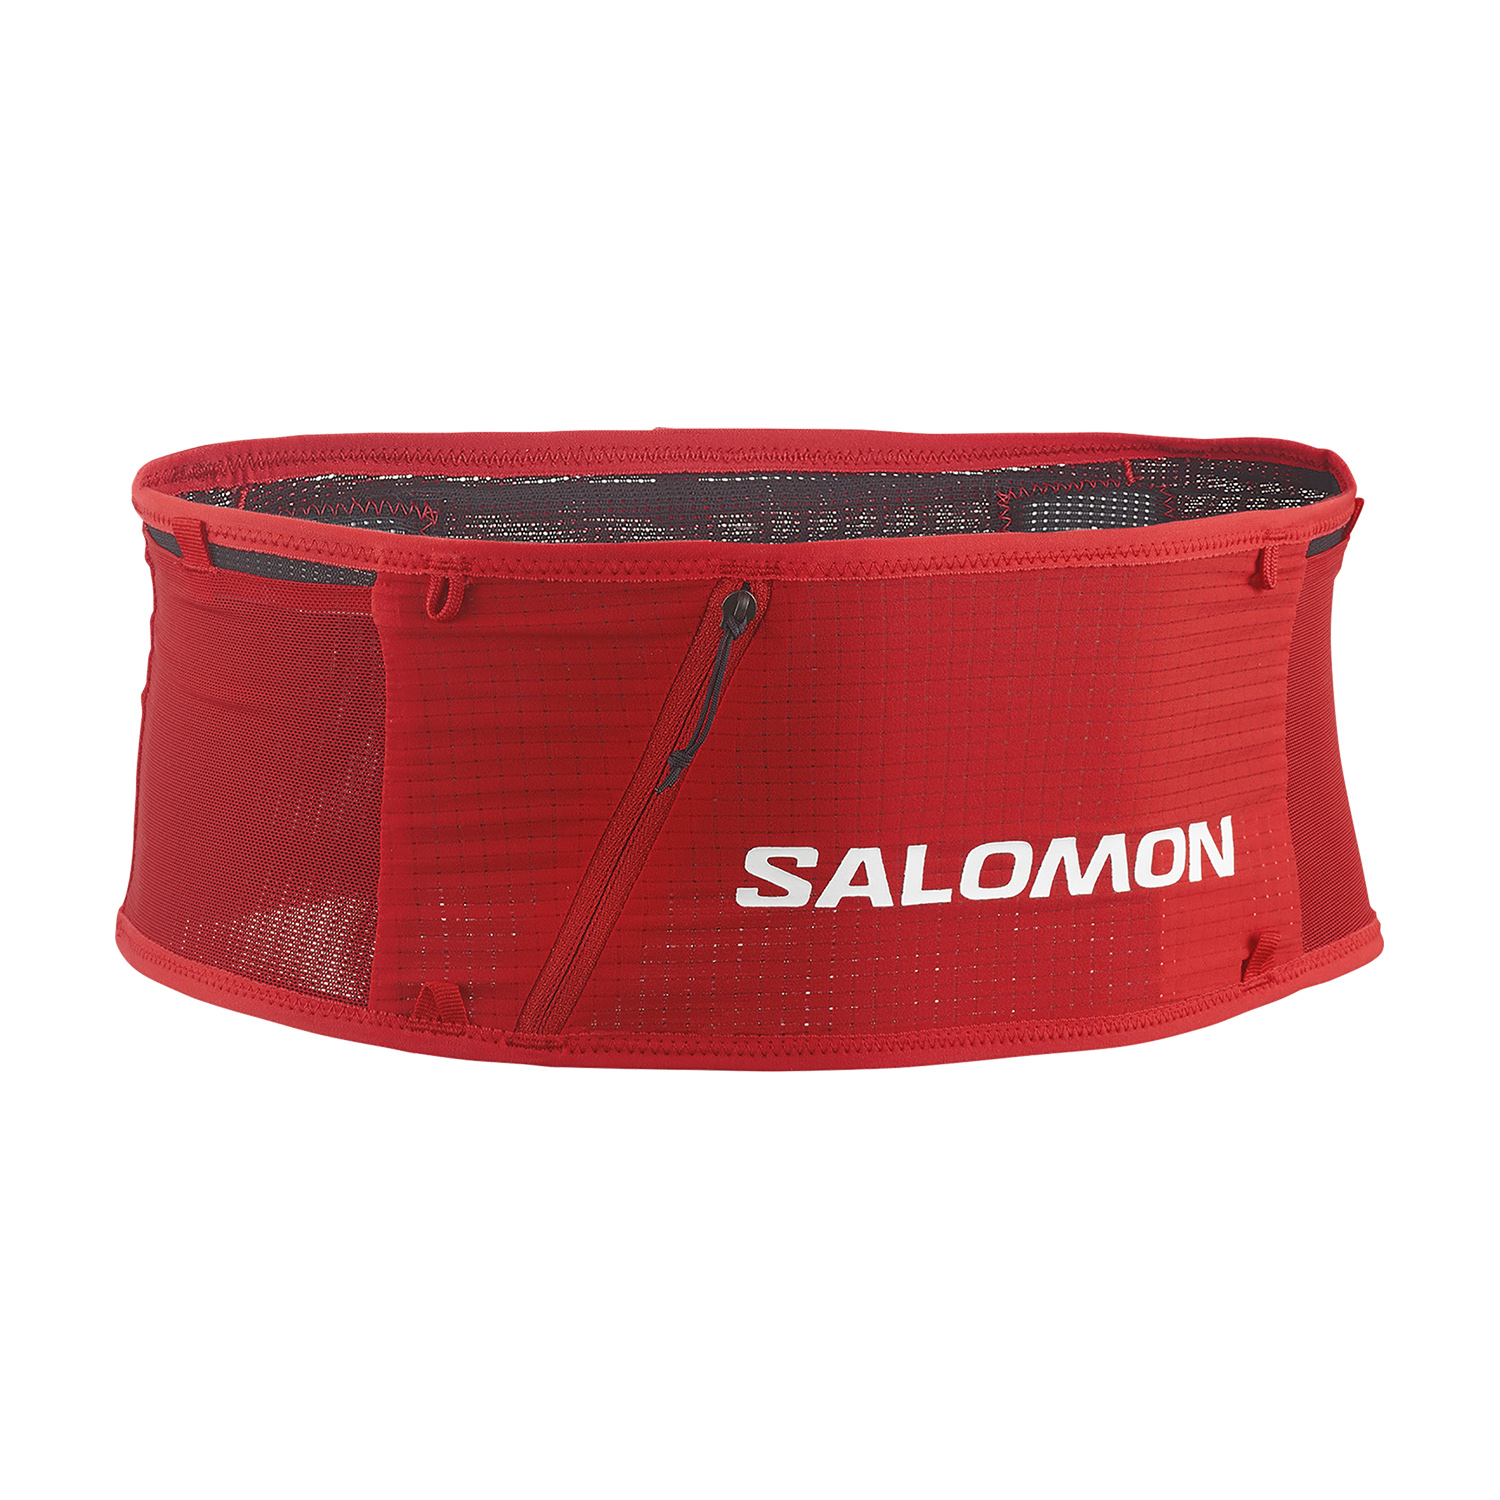 Salomon S/Lab Cintura - Fiery Red/Black